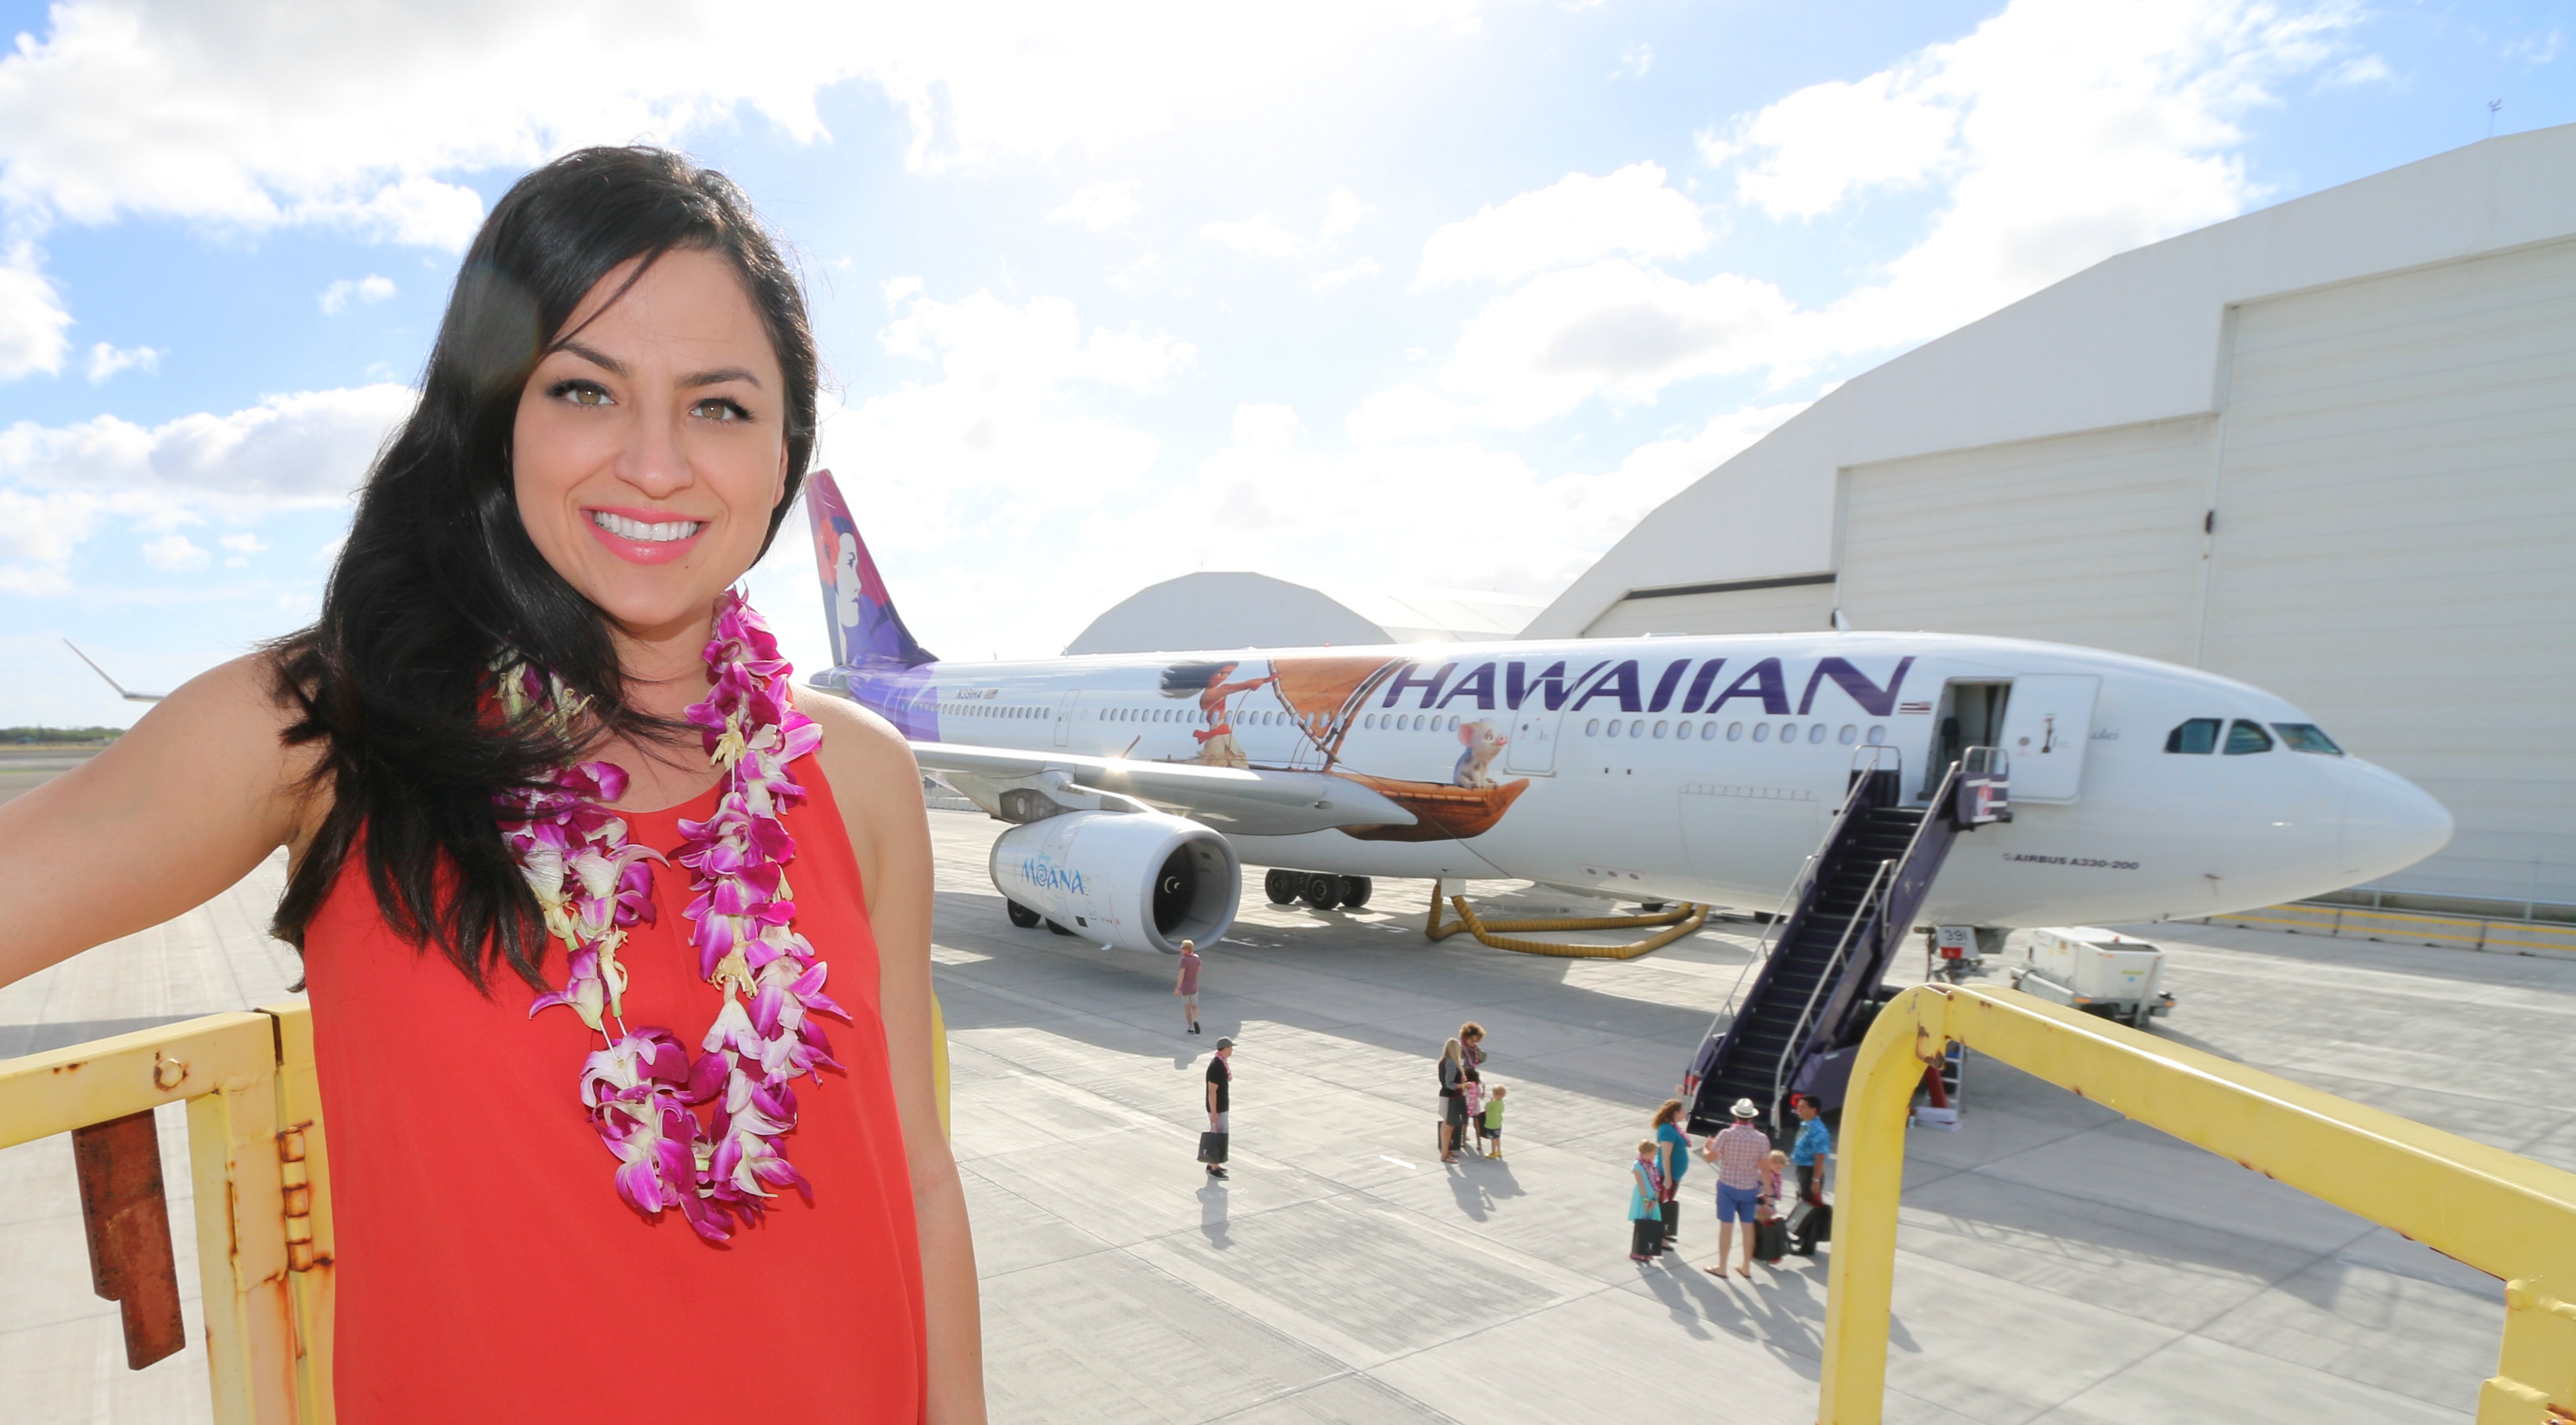 stephanie-be-with-the-hawaiian-airlines-moana-plane-travel-break-net